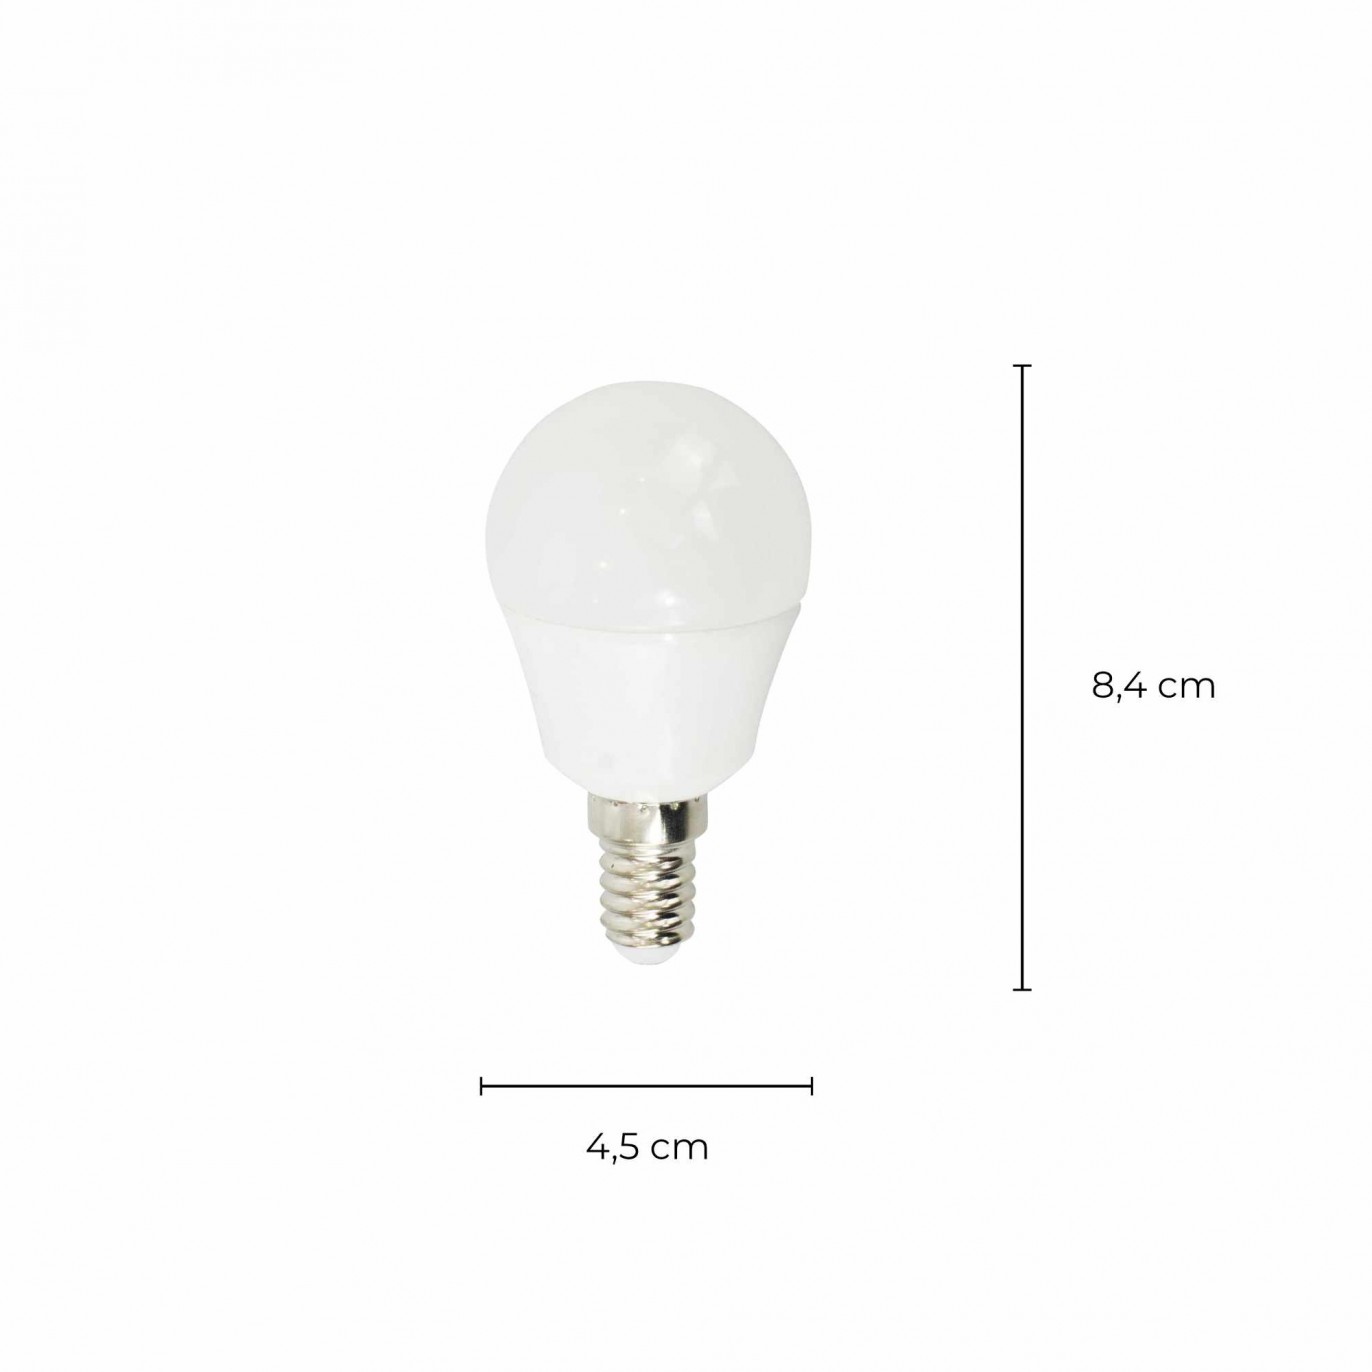 Lideka® - Ampoule LED Intelligente E14 RVB Blanc Chaud Blanc Froid avec  WLAN & App